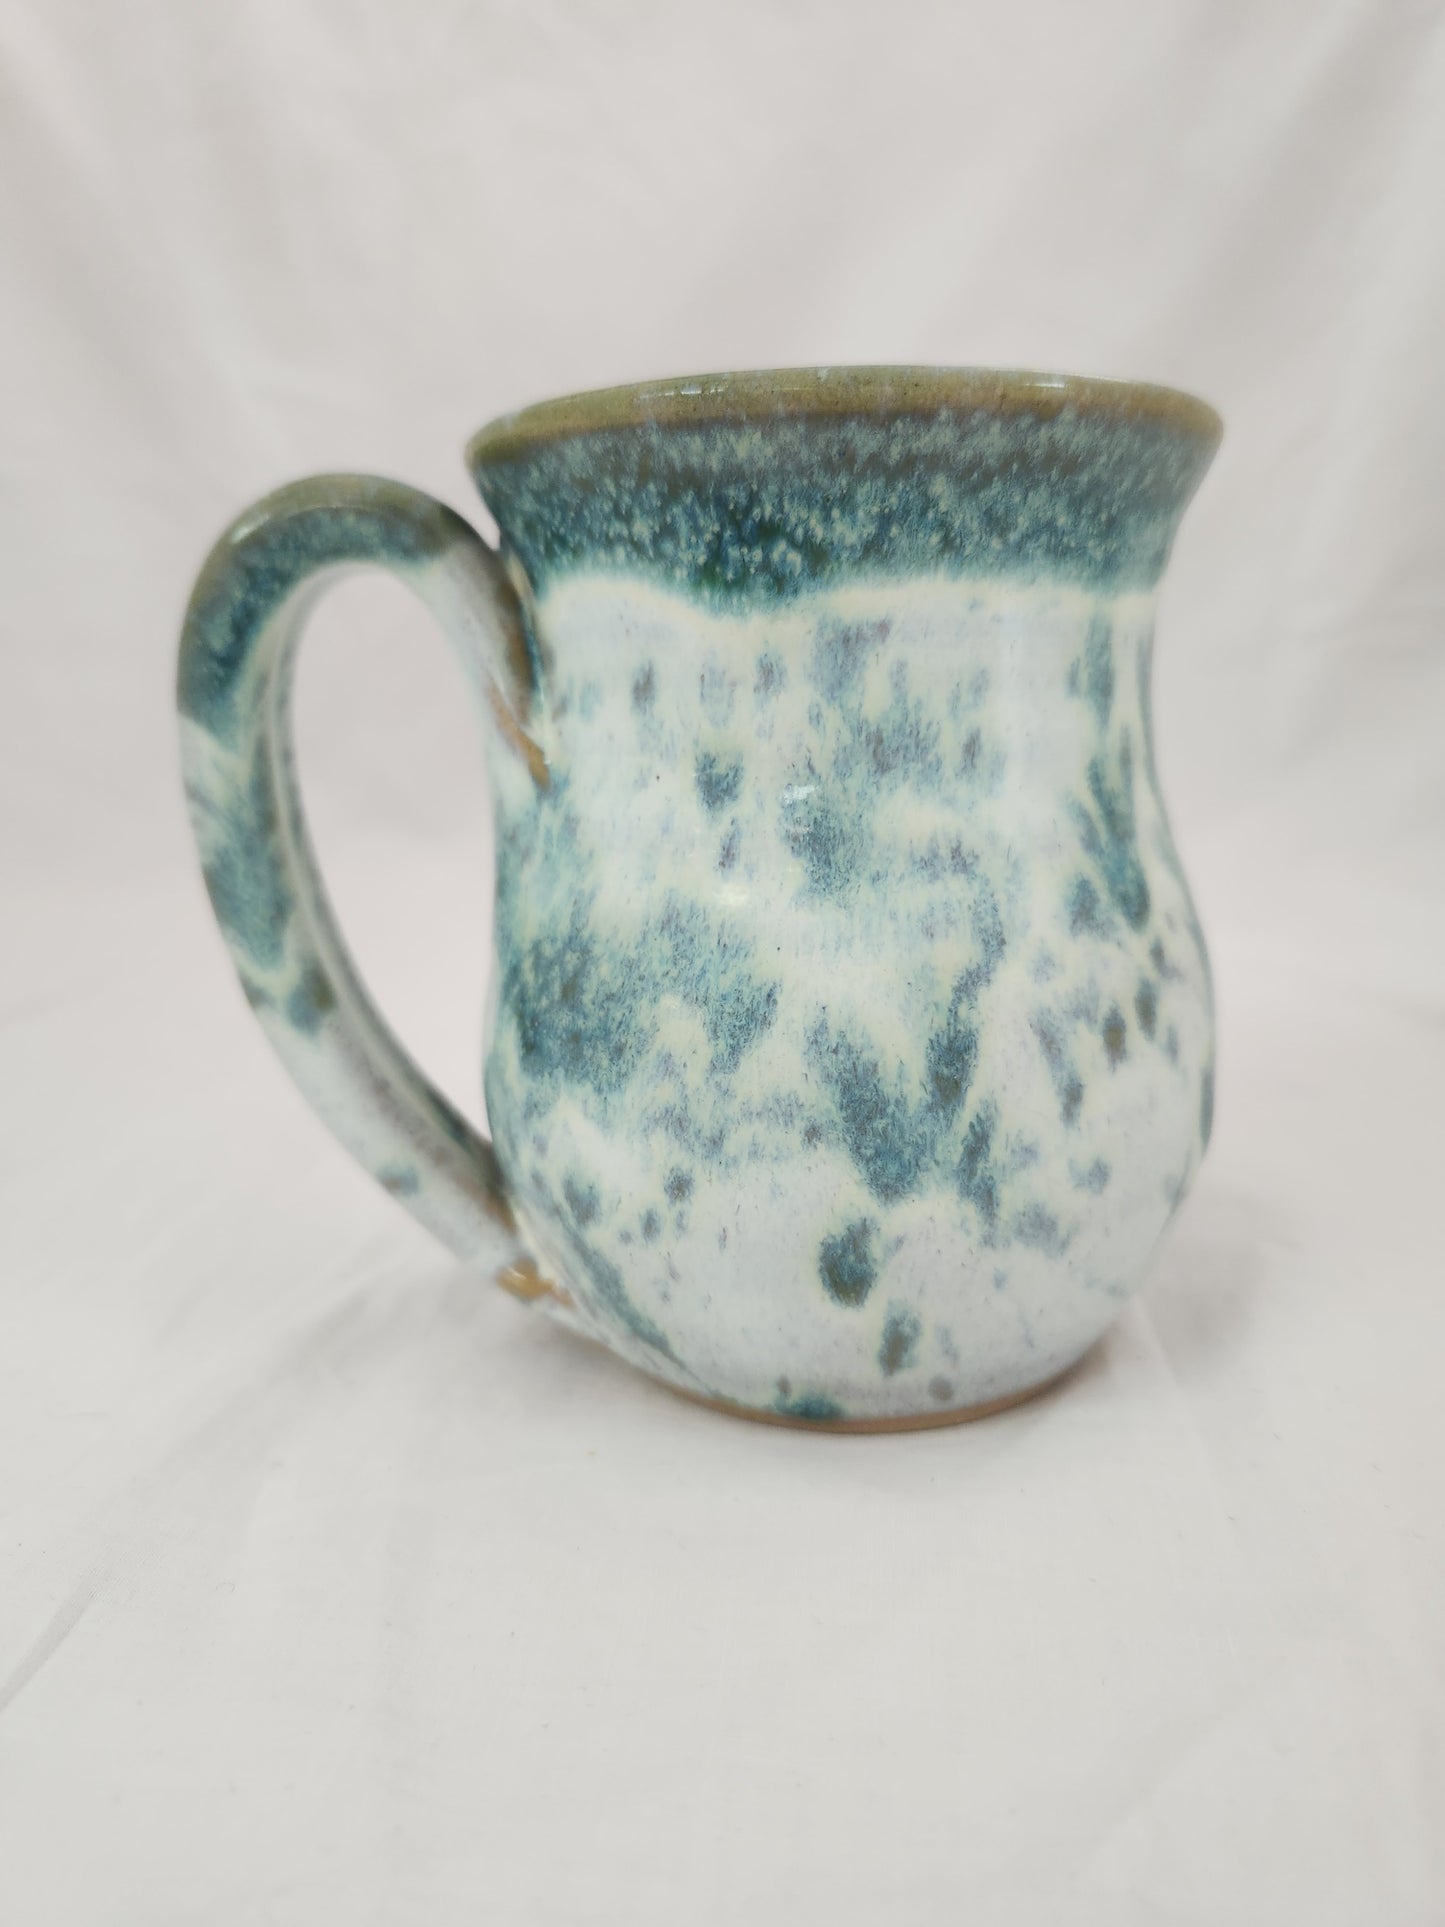 Amazing ~ Seagrove Potluck Pottery Mug signed Laura Teague Moore 1989